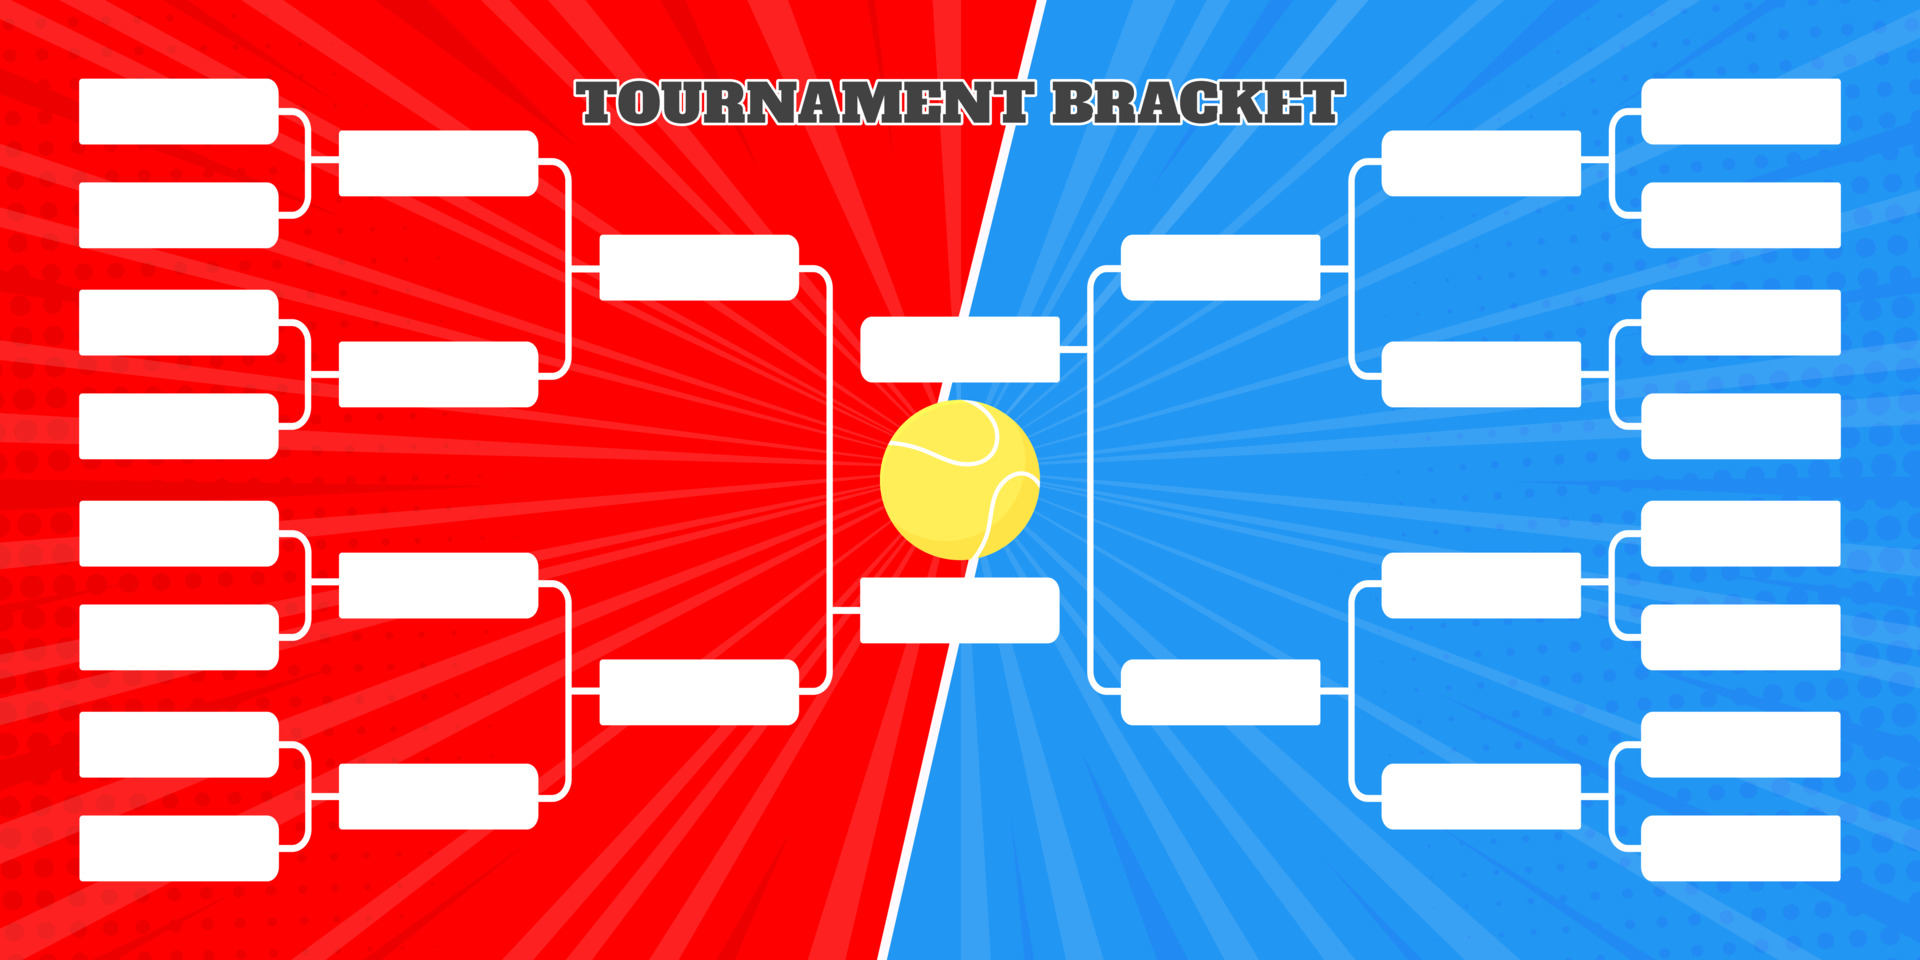 16-team-tournament-bracket-championship-template-flat-style-design